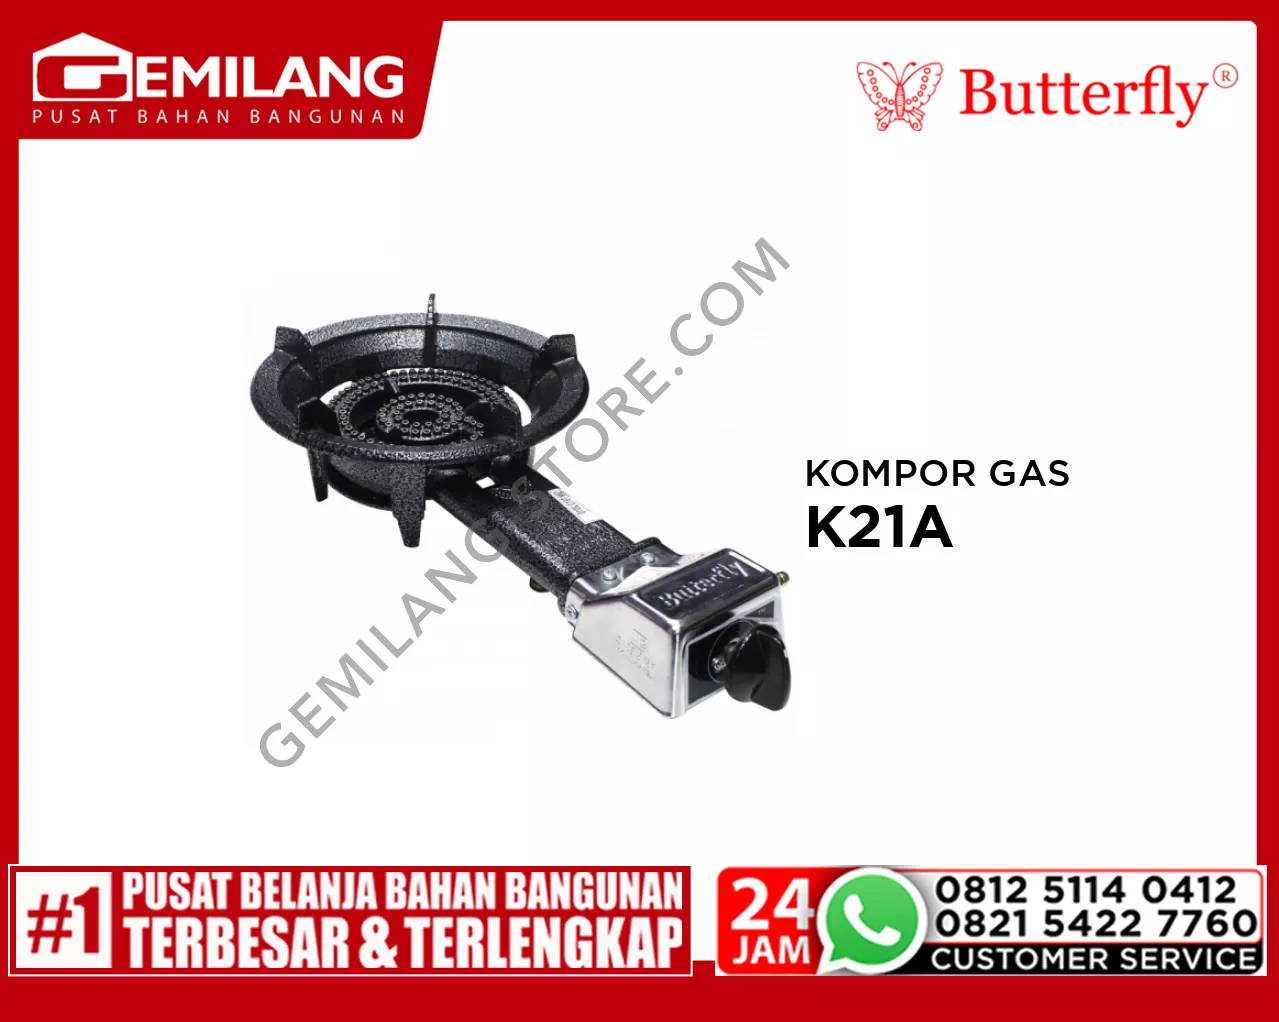 BUTTERFLY KOMPOR GAS K21A